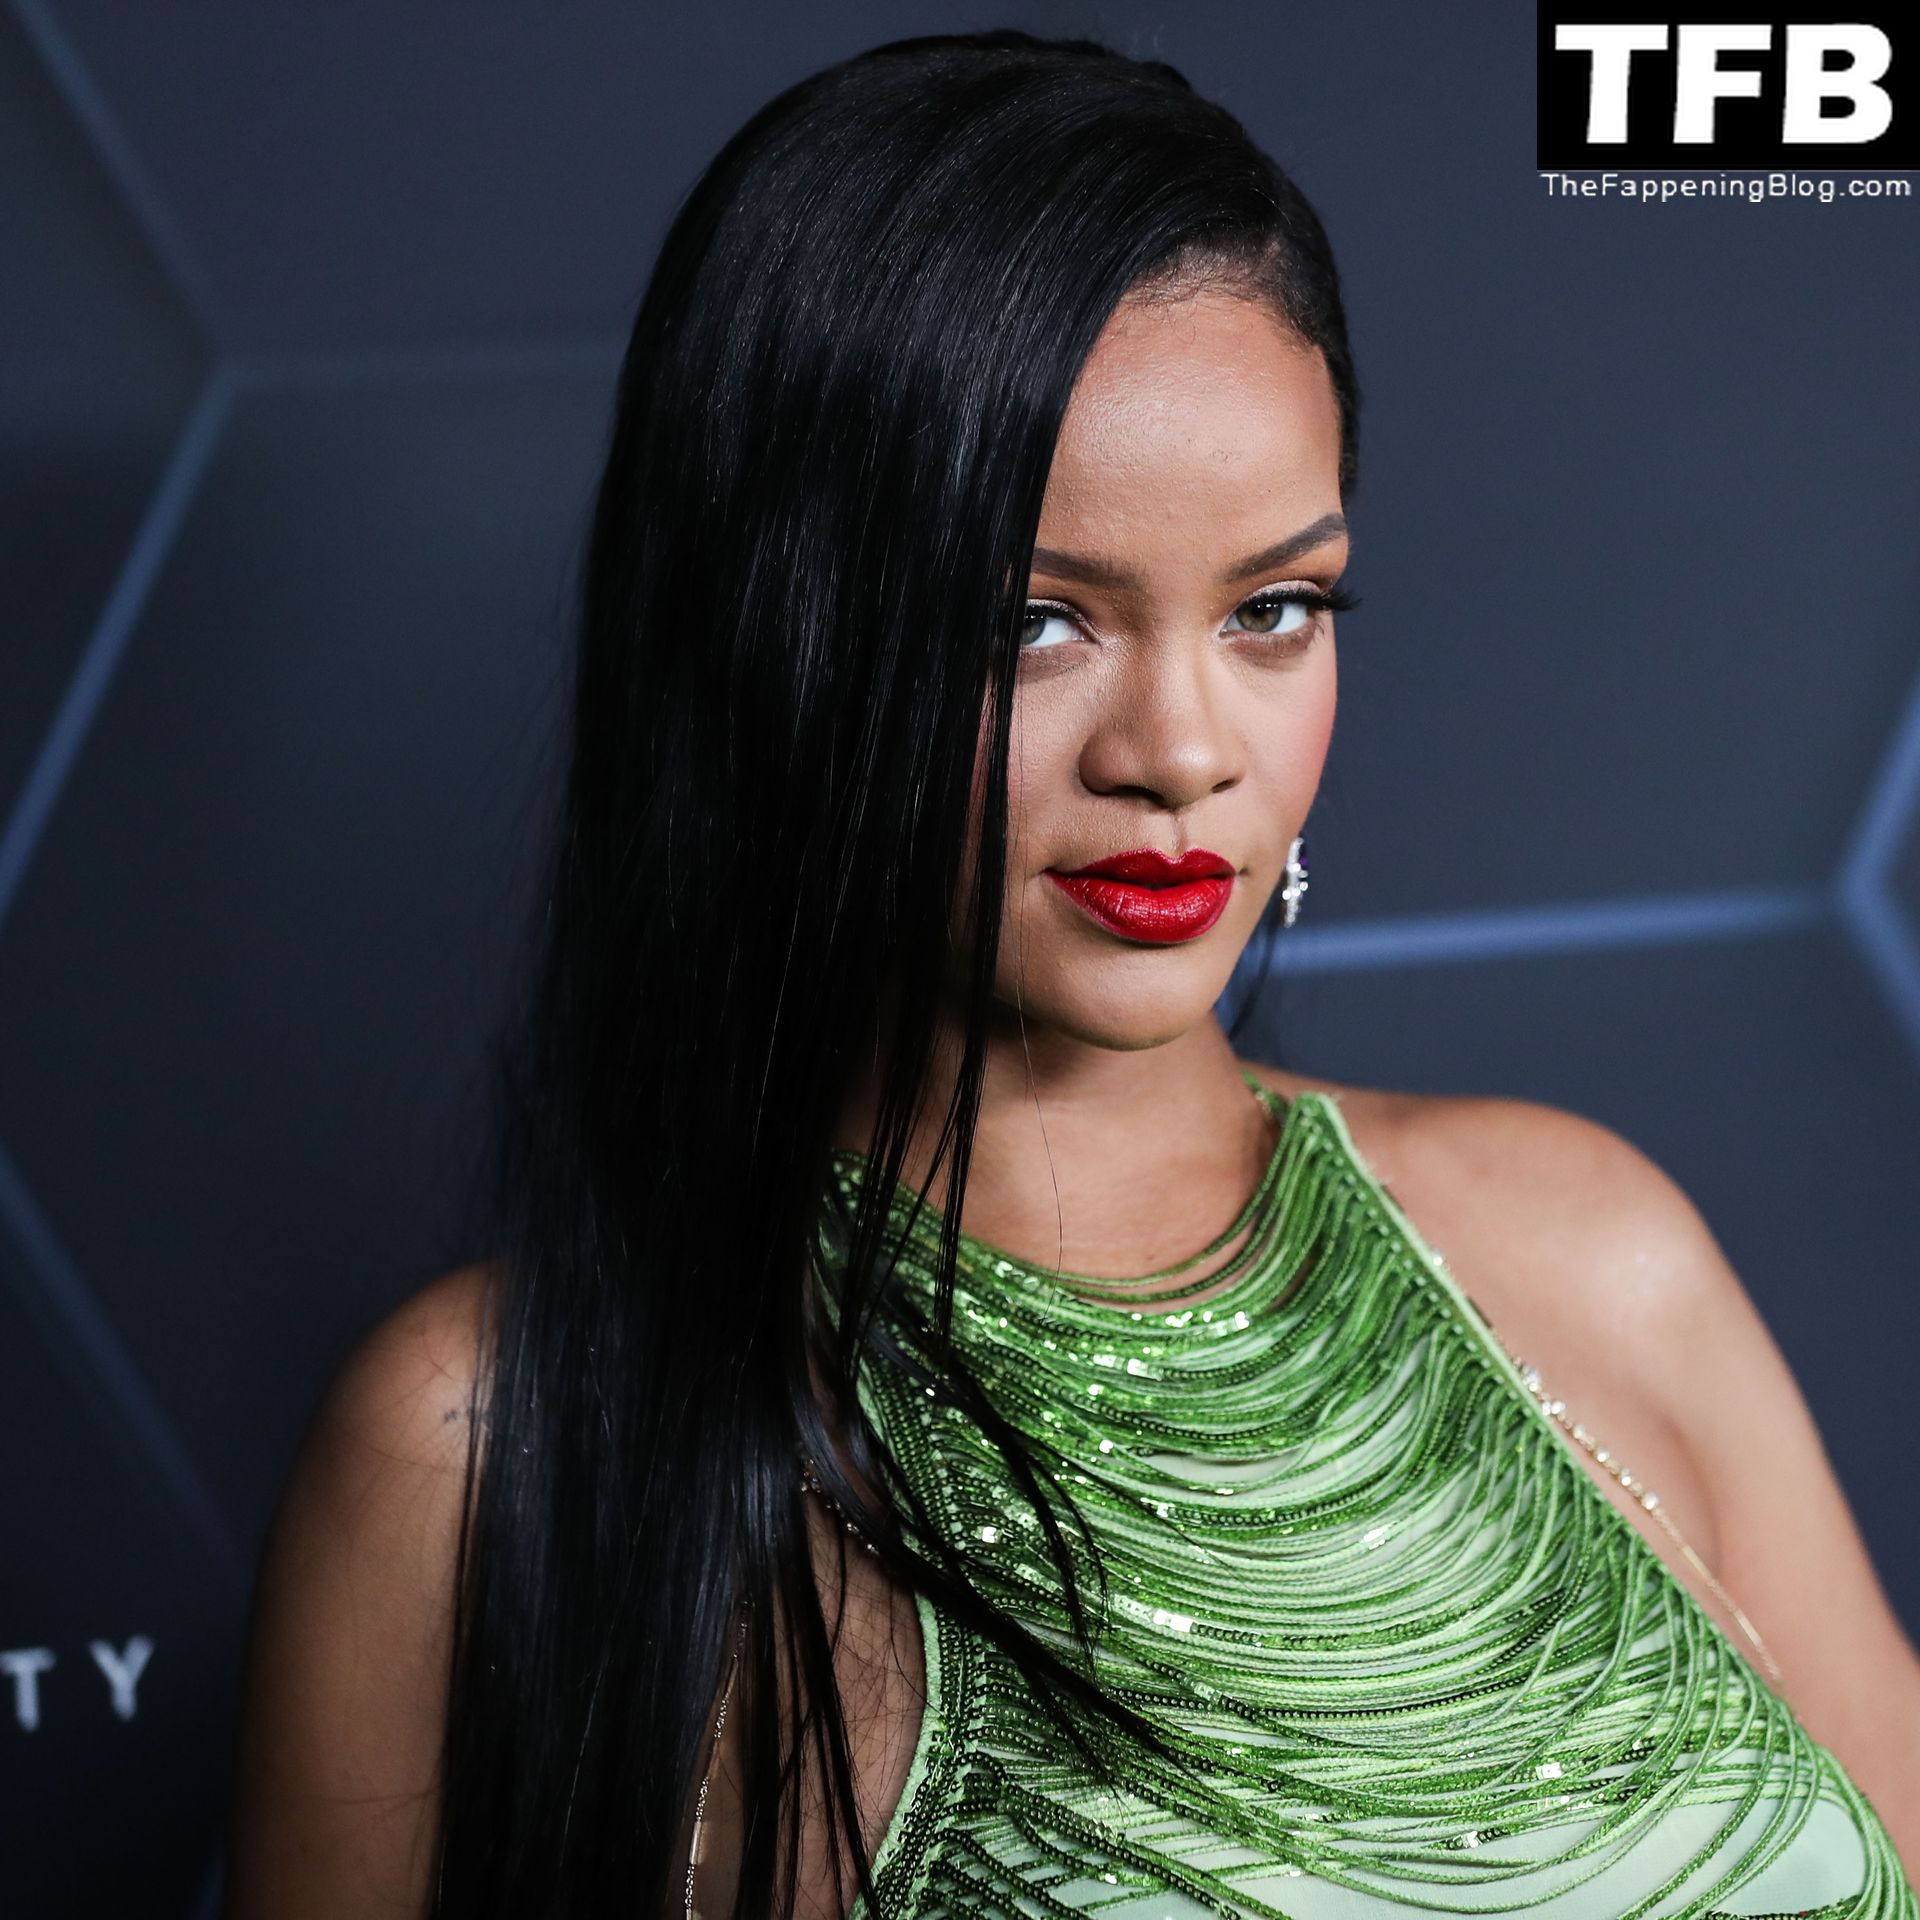 Rihanna-Sexy-The-Fappening-Blog-52.jpg